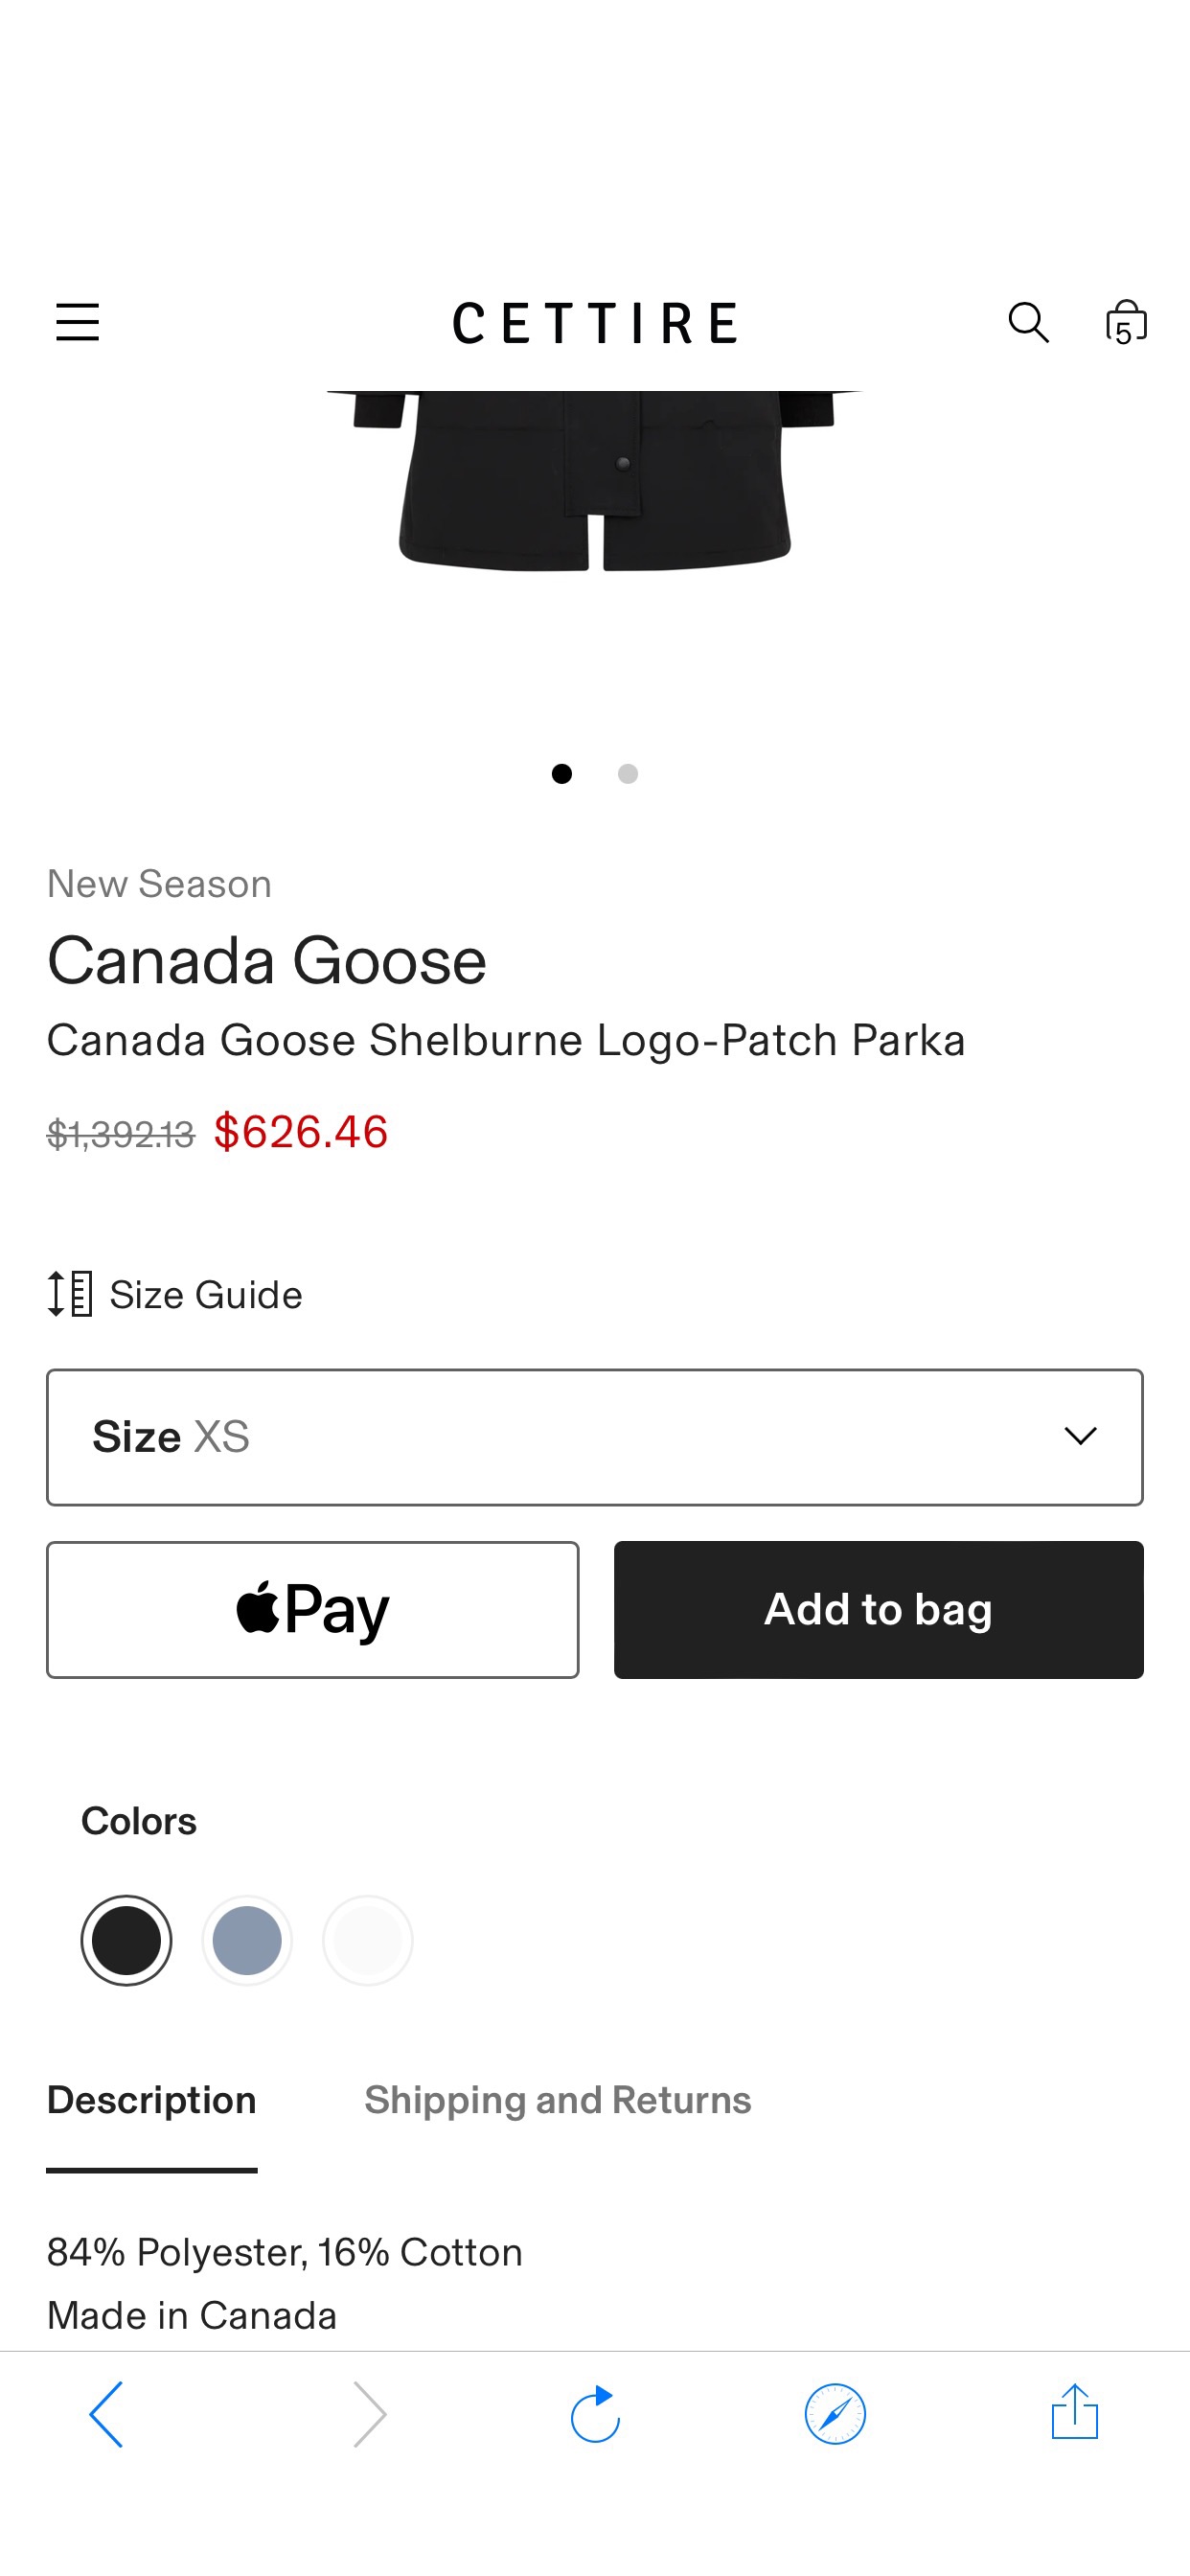 Canada Goose Shelburne Logo-Patch Parka – Cettire